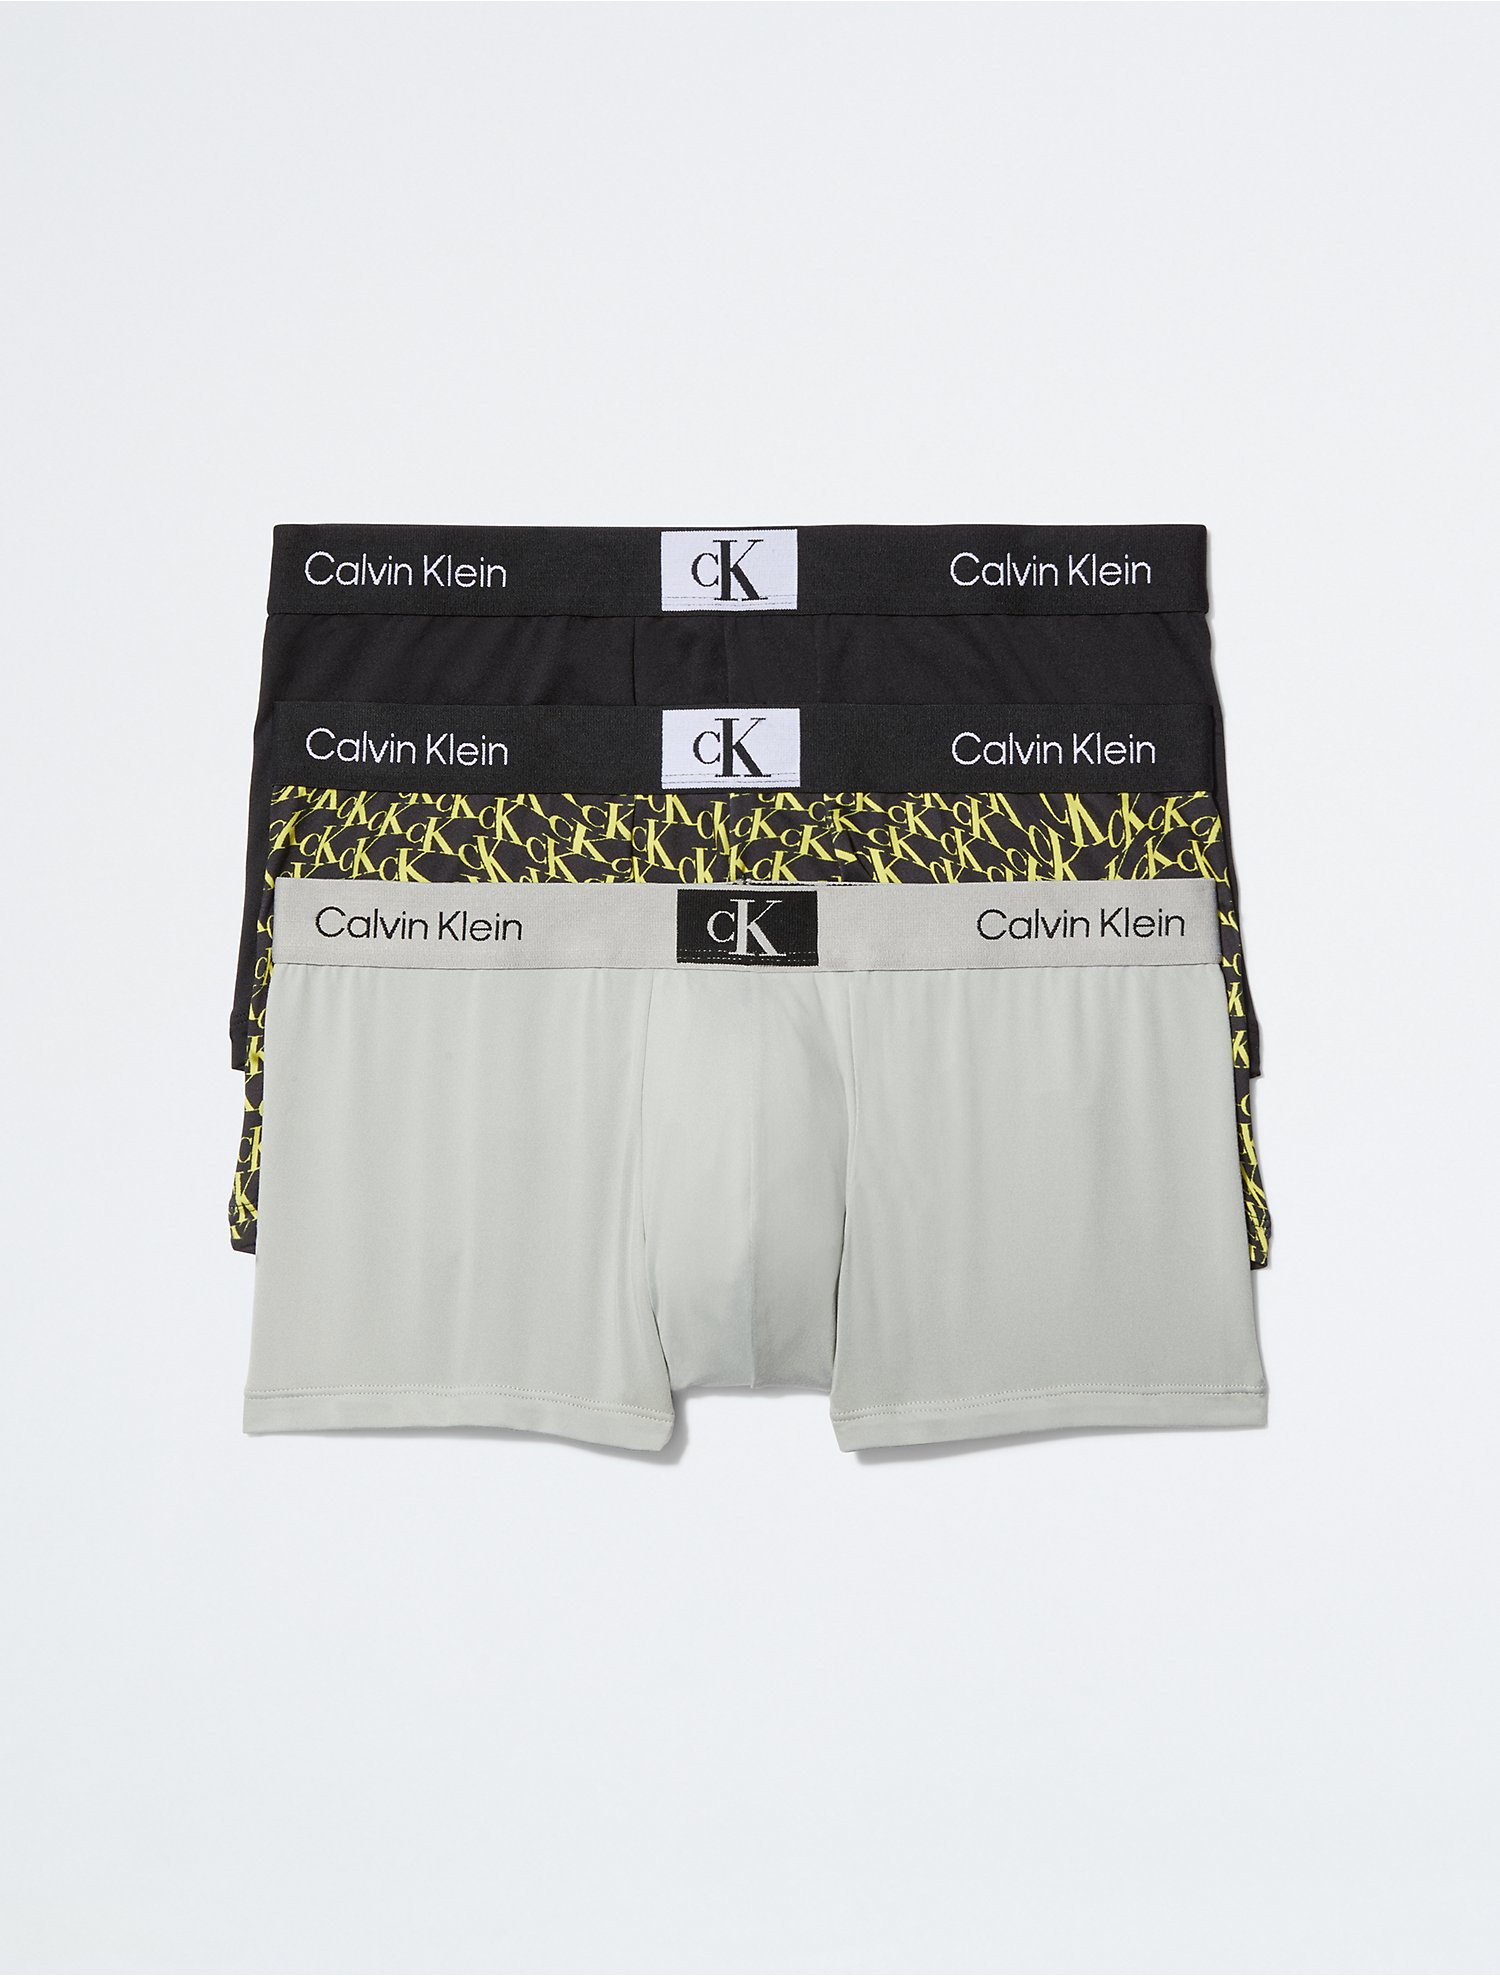 Calvin Klein 1996 3-Pack Low Rise Trunk | Calvin Klein